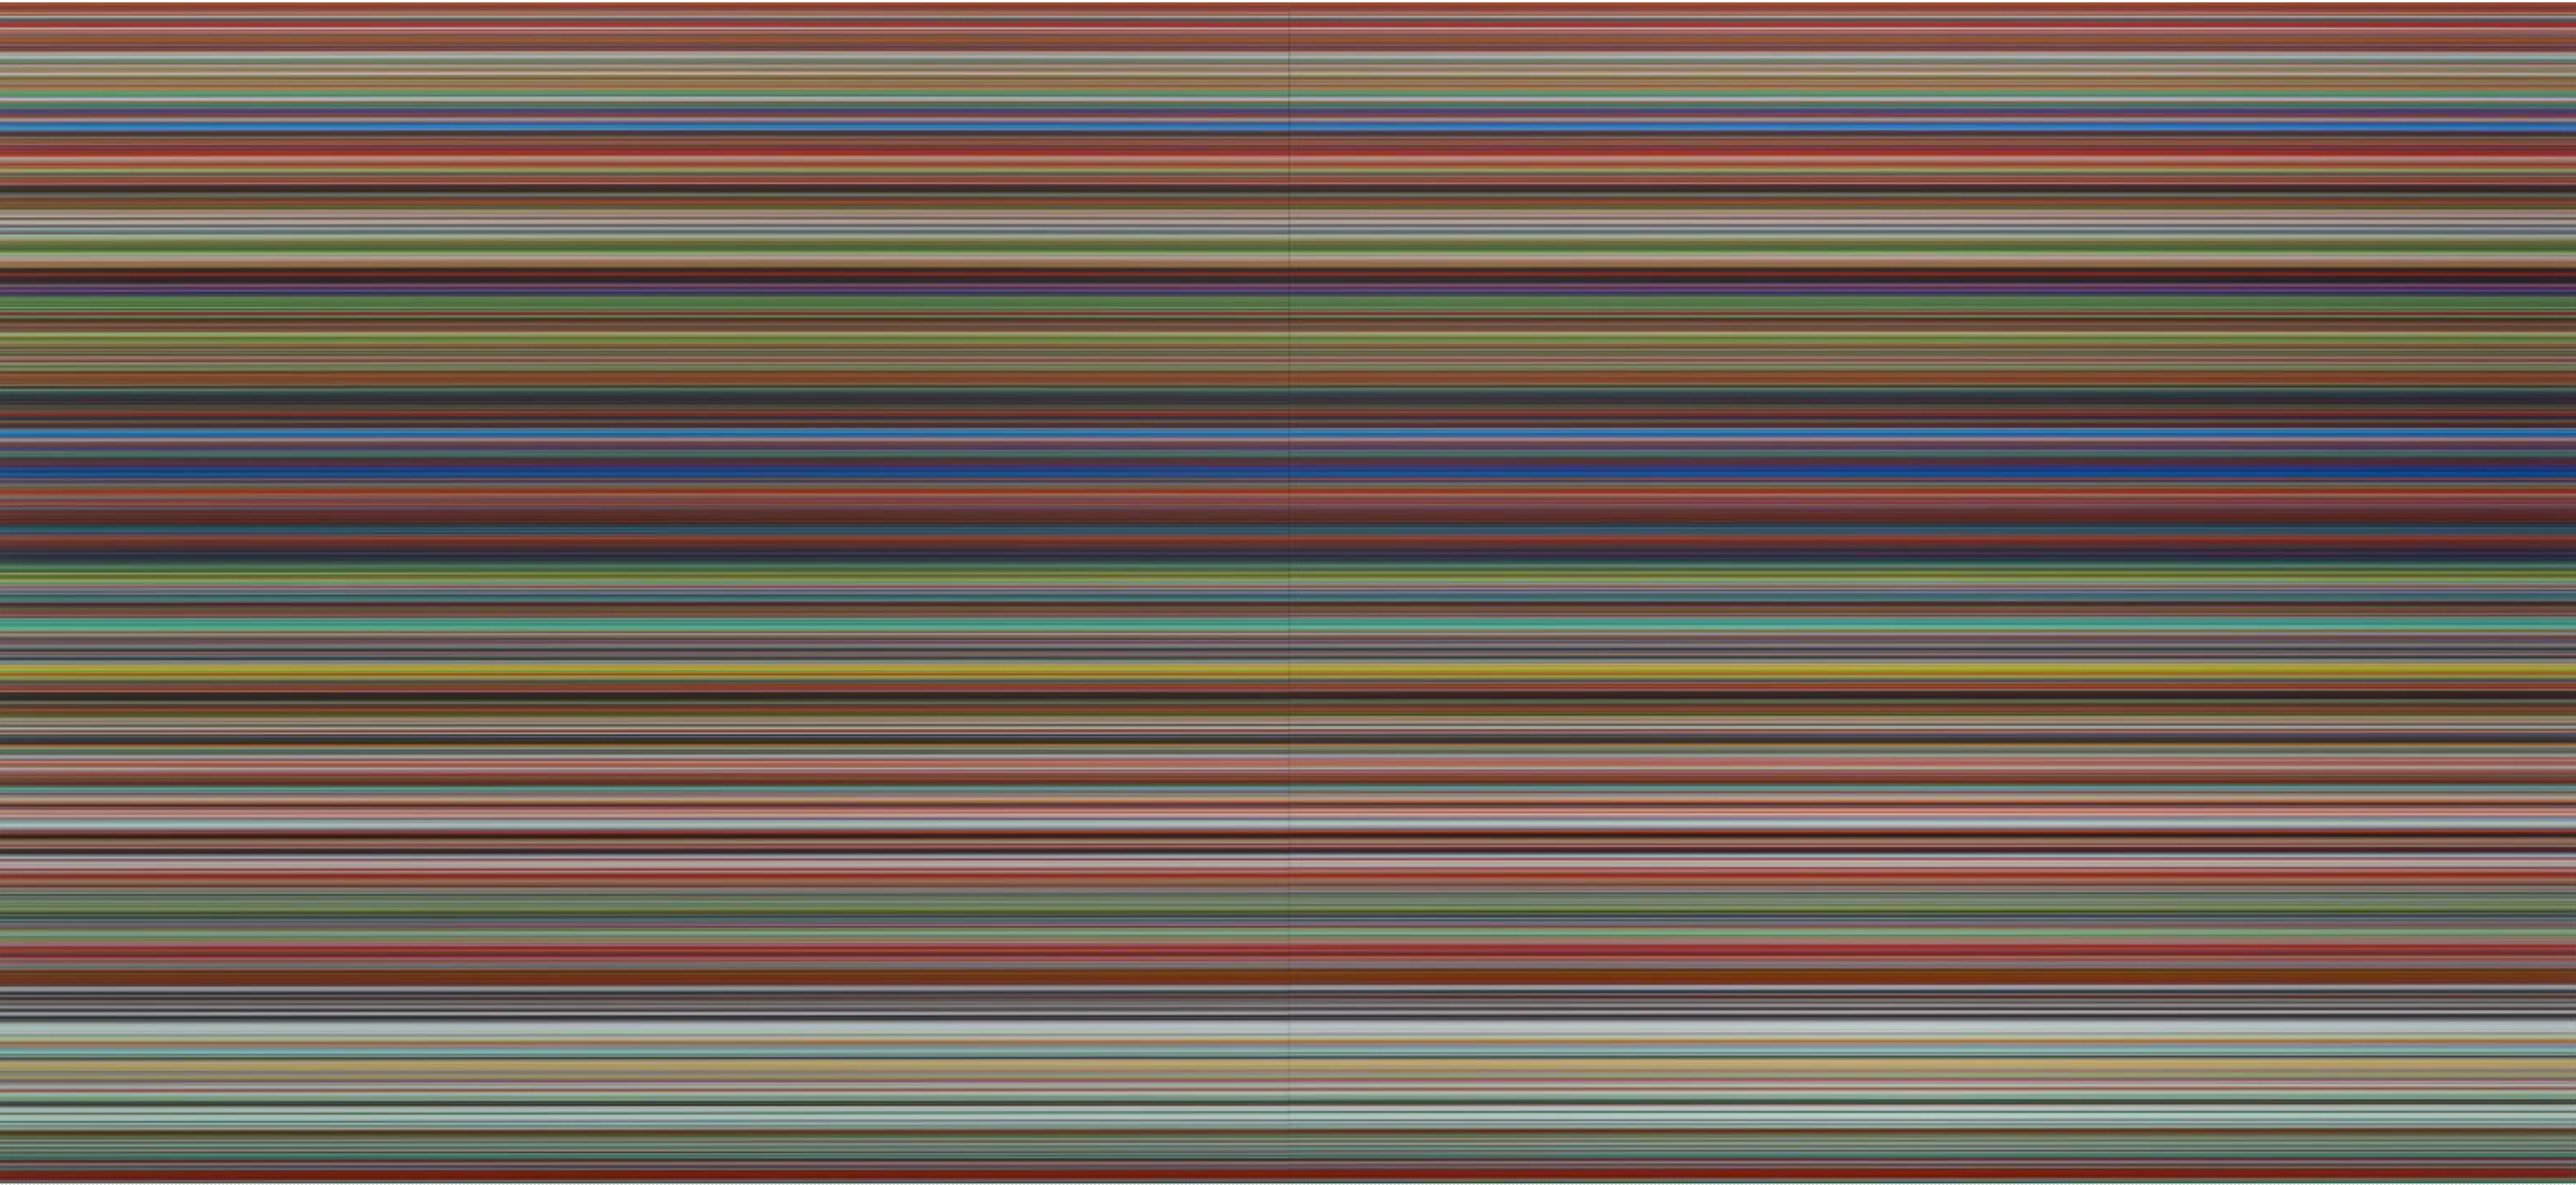 Gerhard Richter's 10 Most Famous Artworks